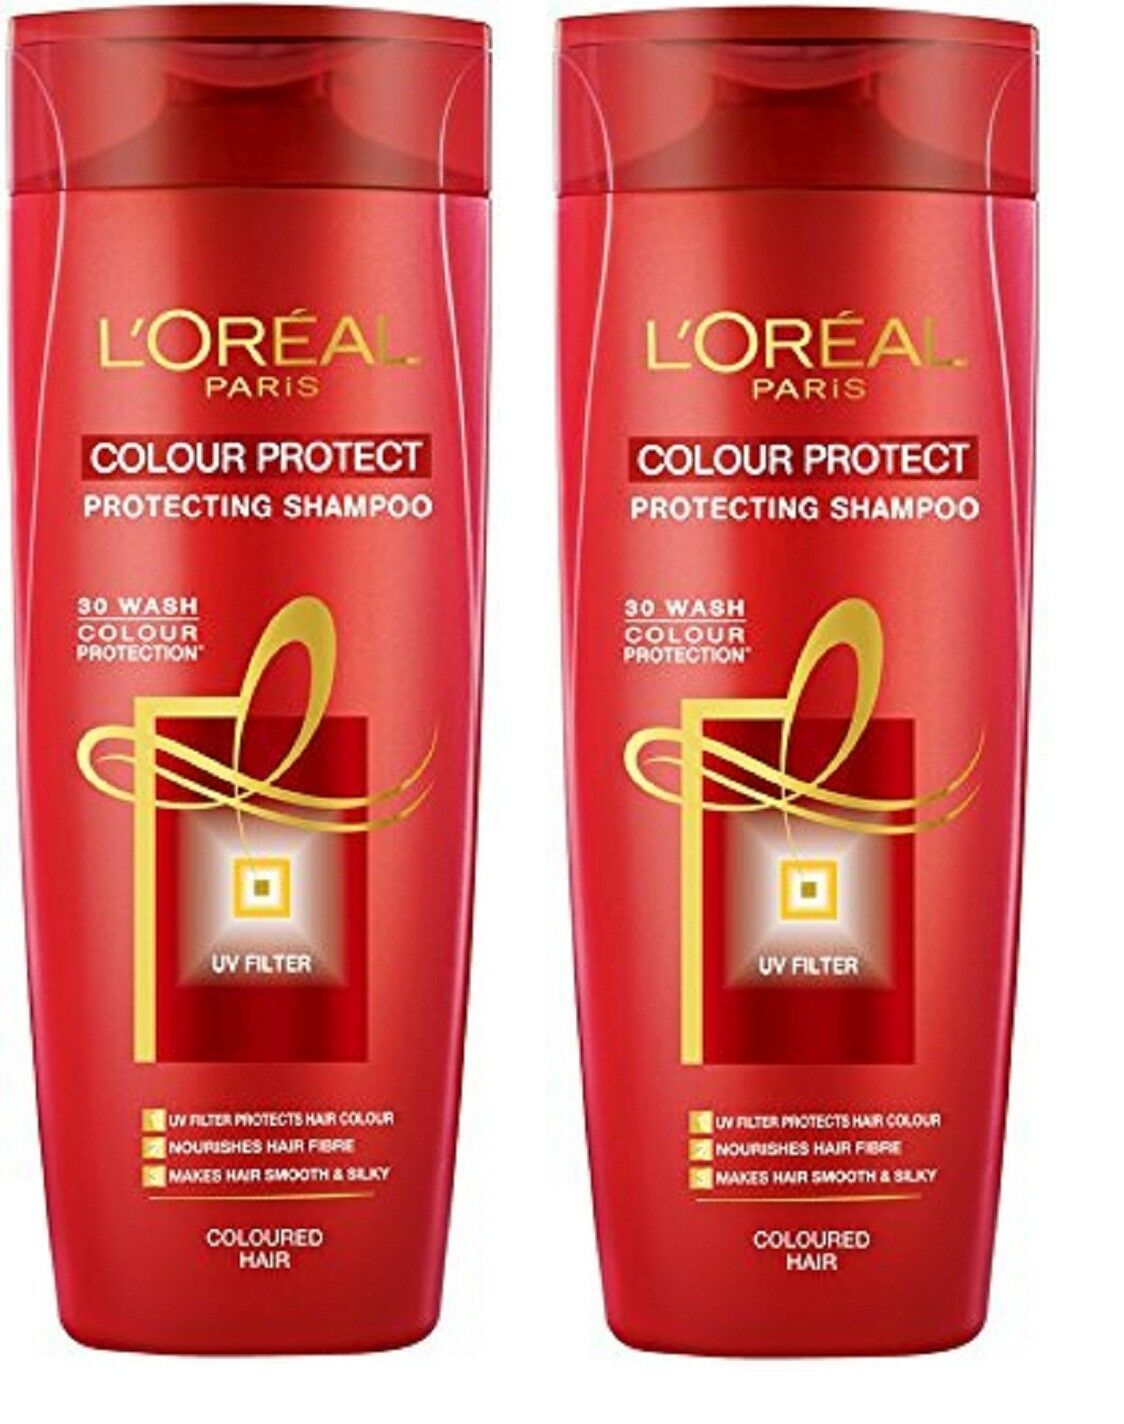 L'Oreal Paris Colour Protect Protecting Shampoo 175 ml-Makes Hair Smooth & Silk - $23.02